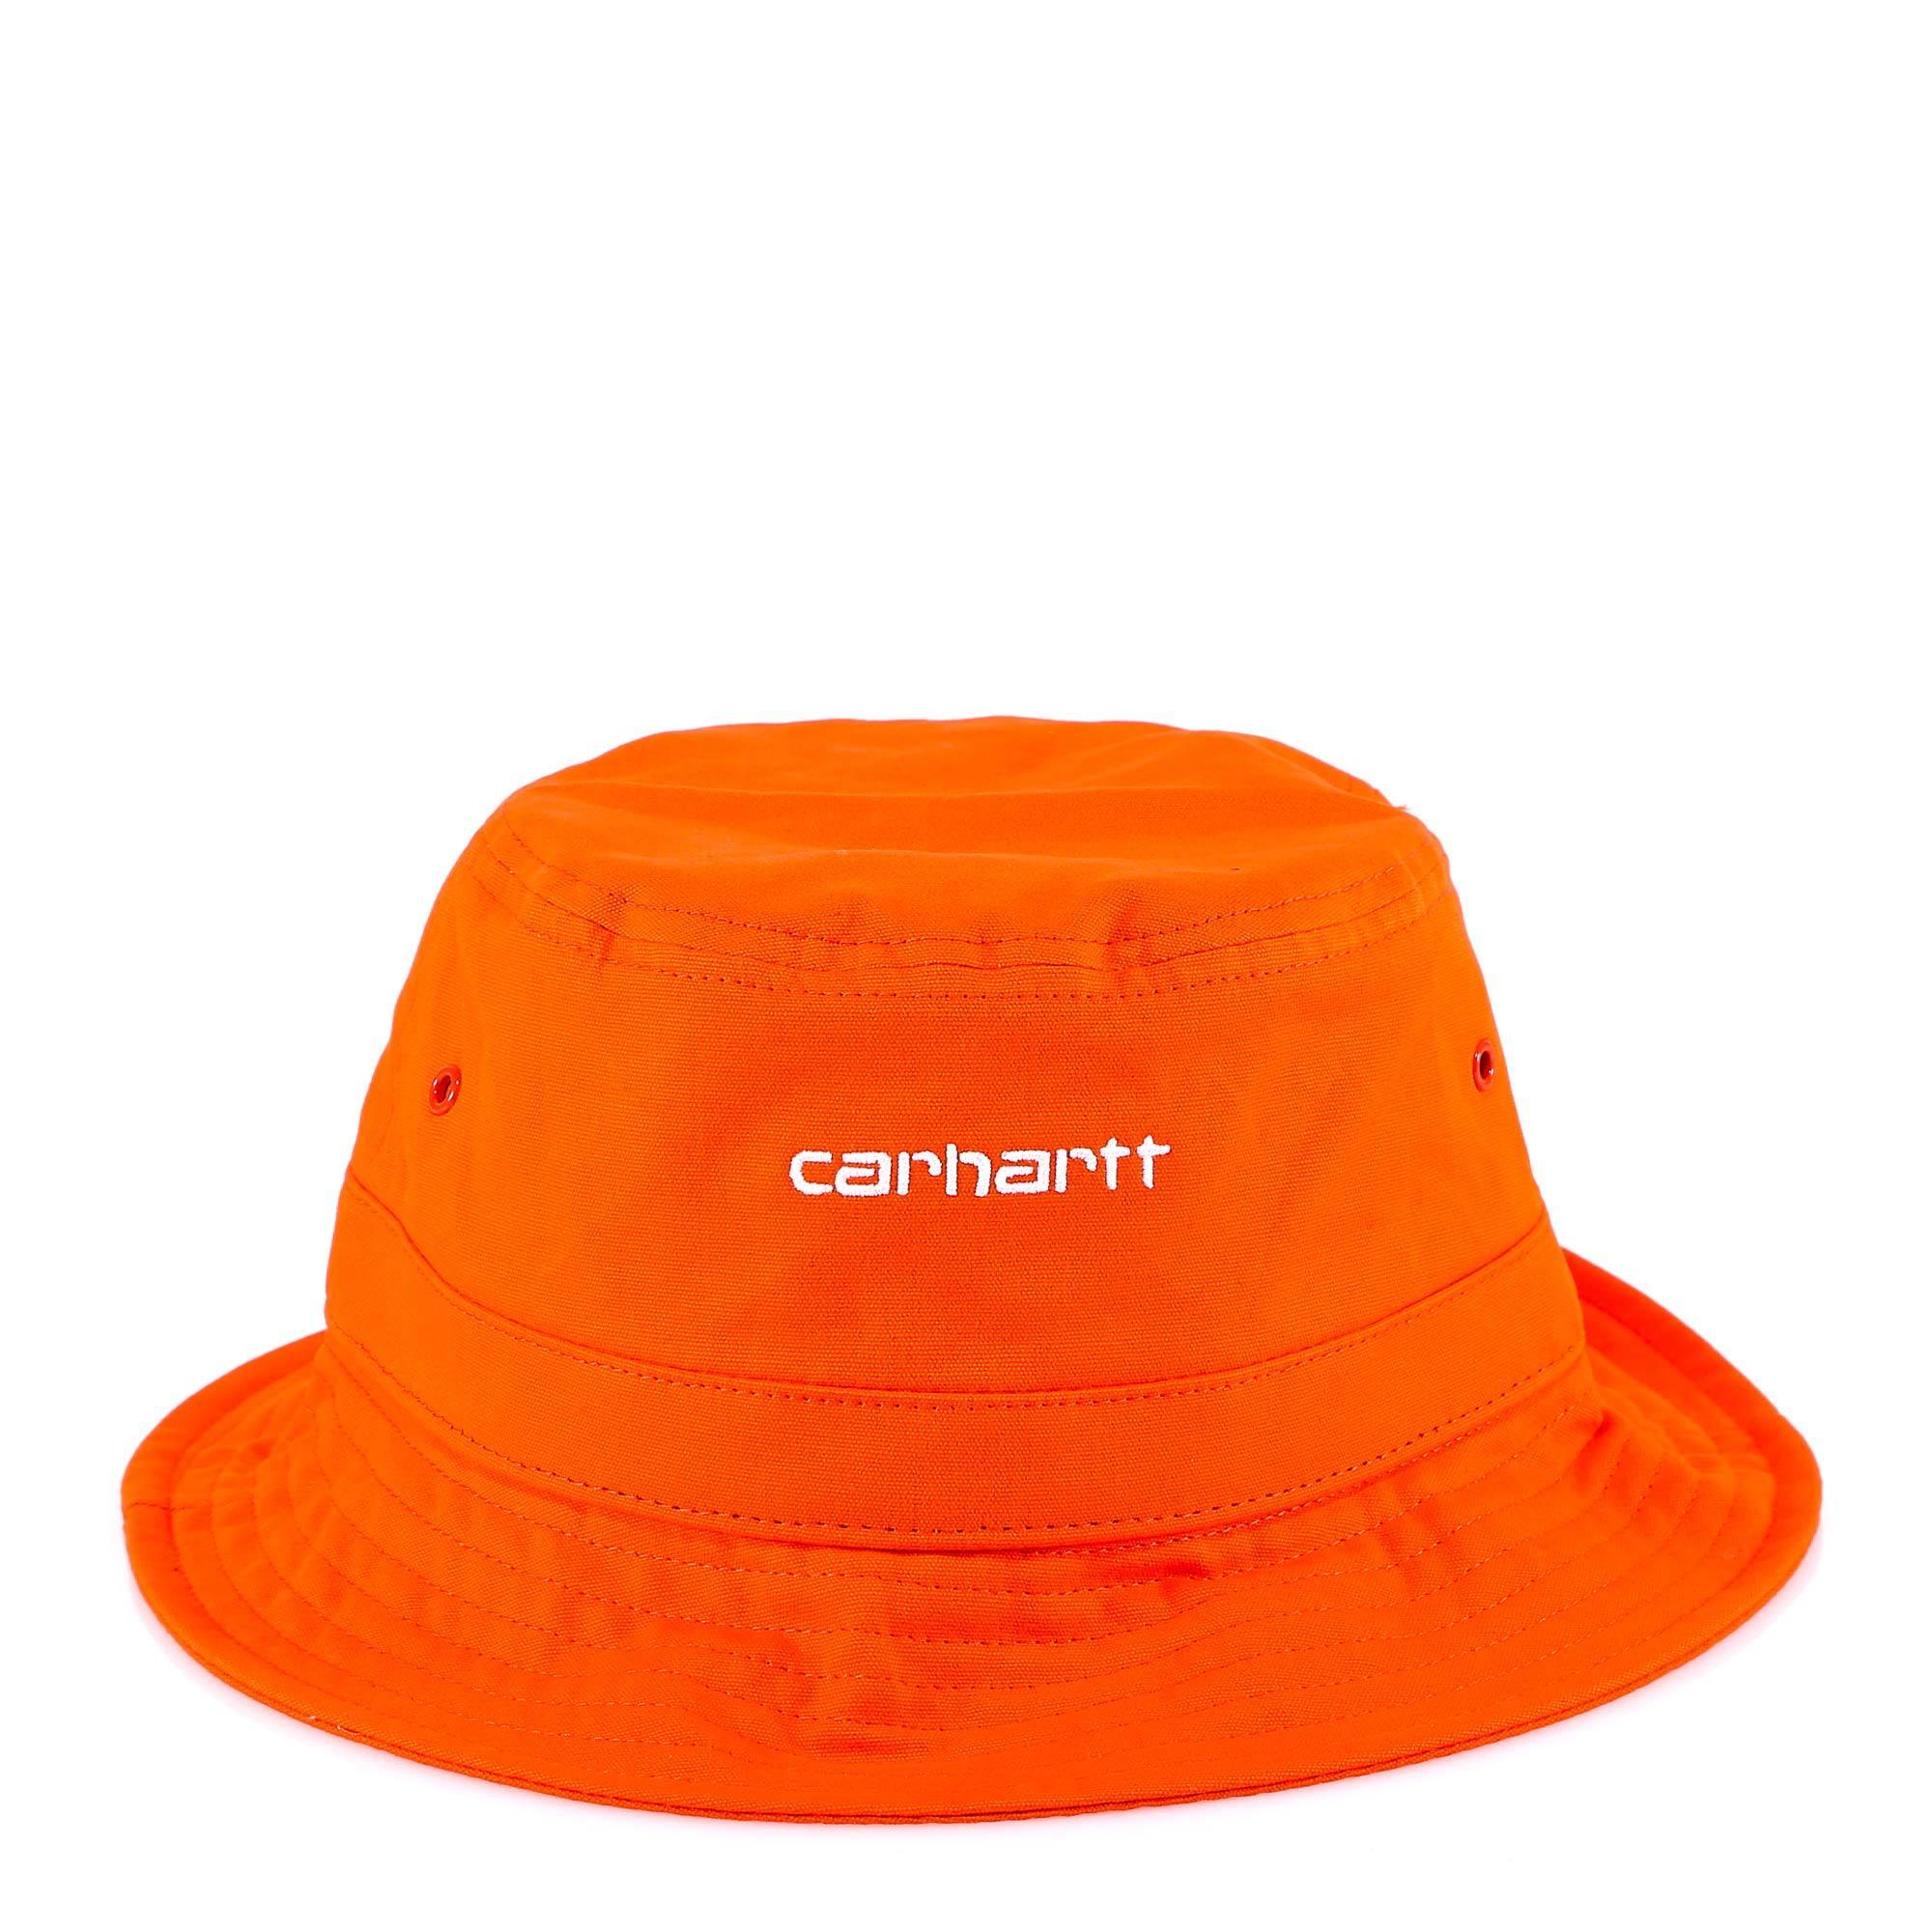 Carhartt Cotton Script Bucket Hat in Orange for Men - Lyst